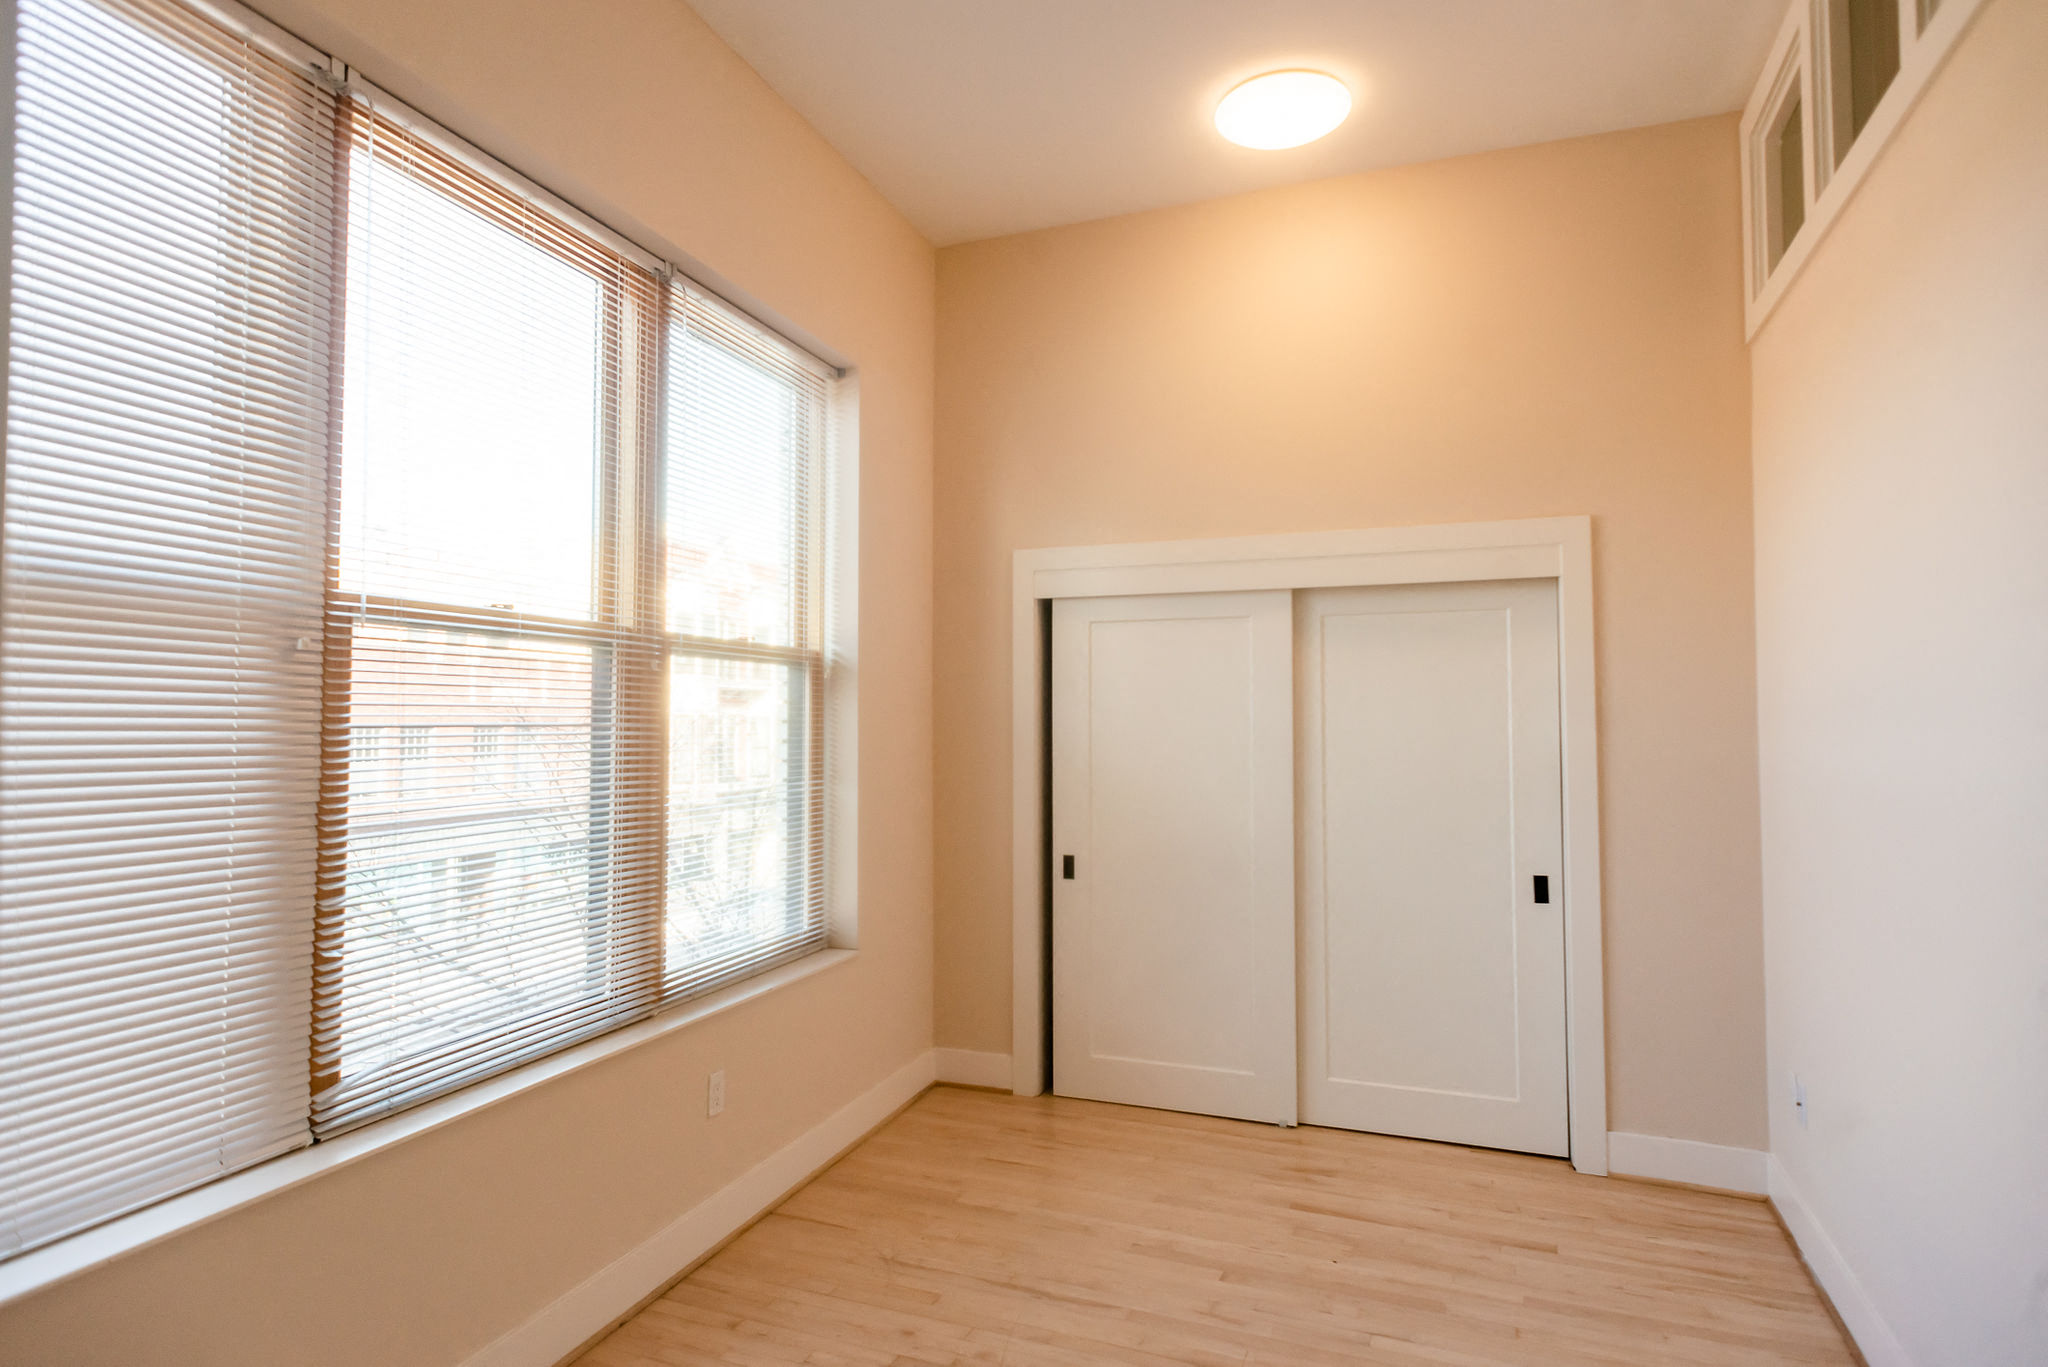 large windows, white closet doors, lvp flooring